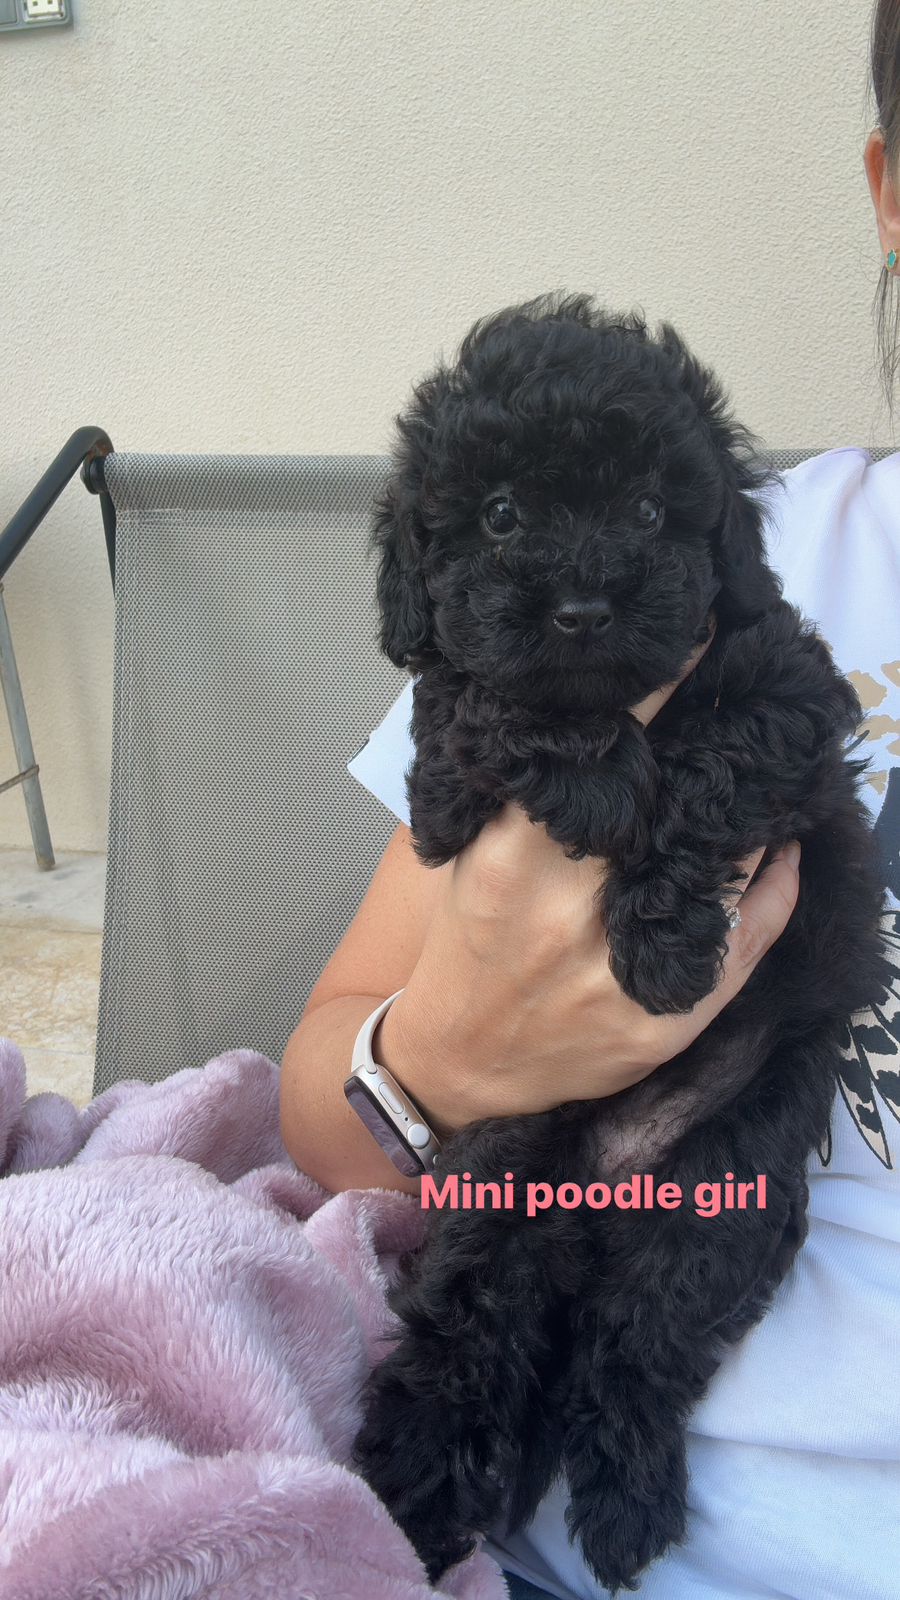 Mini poodle girl